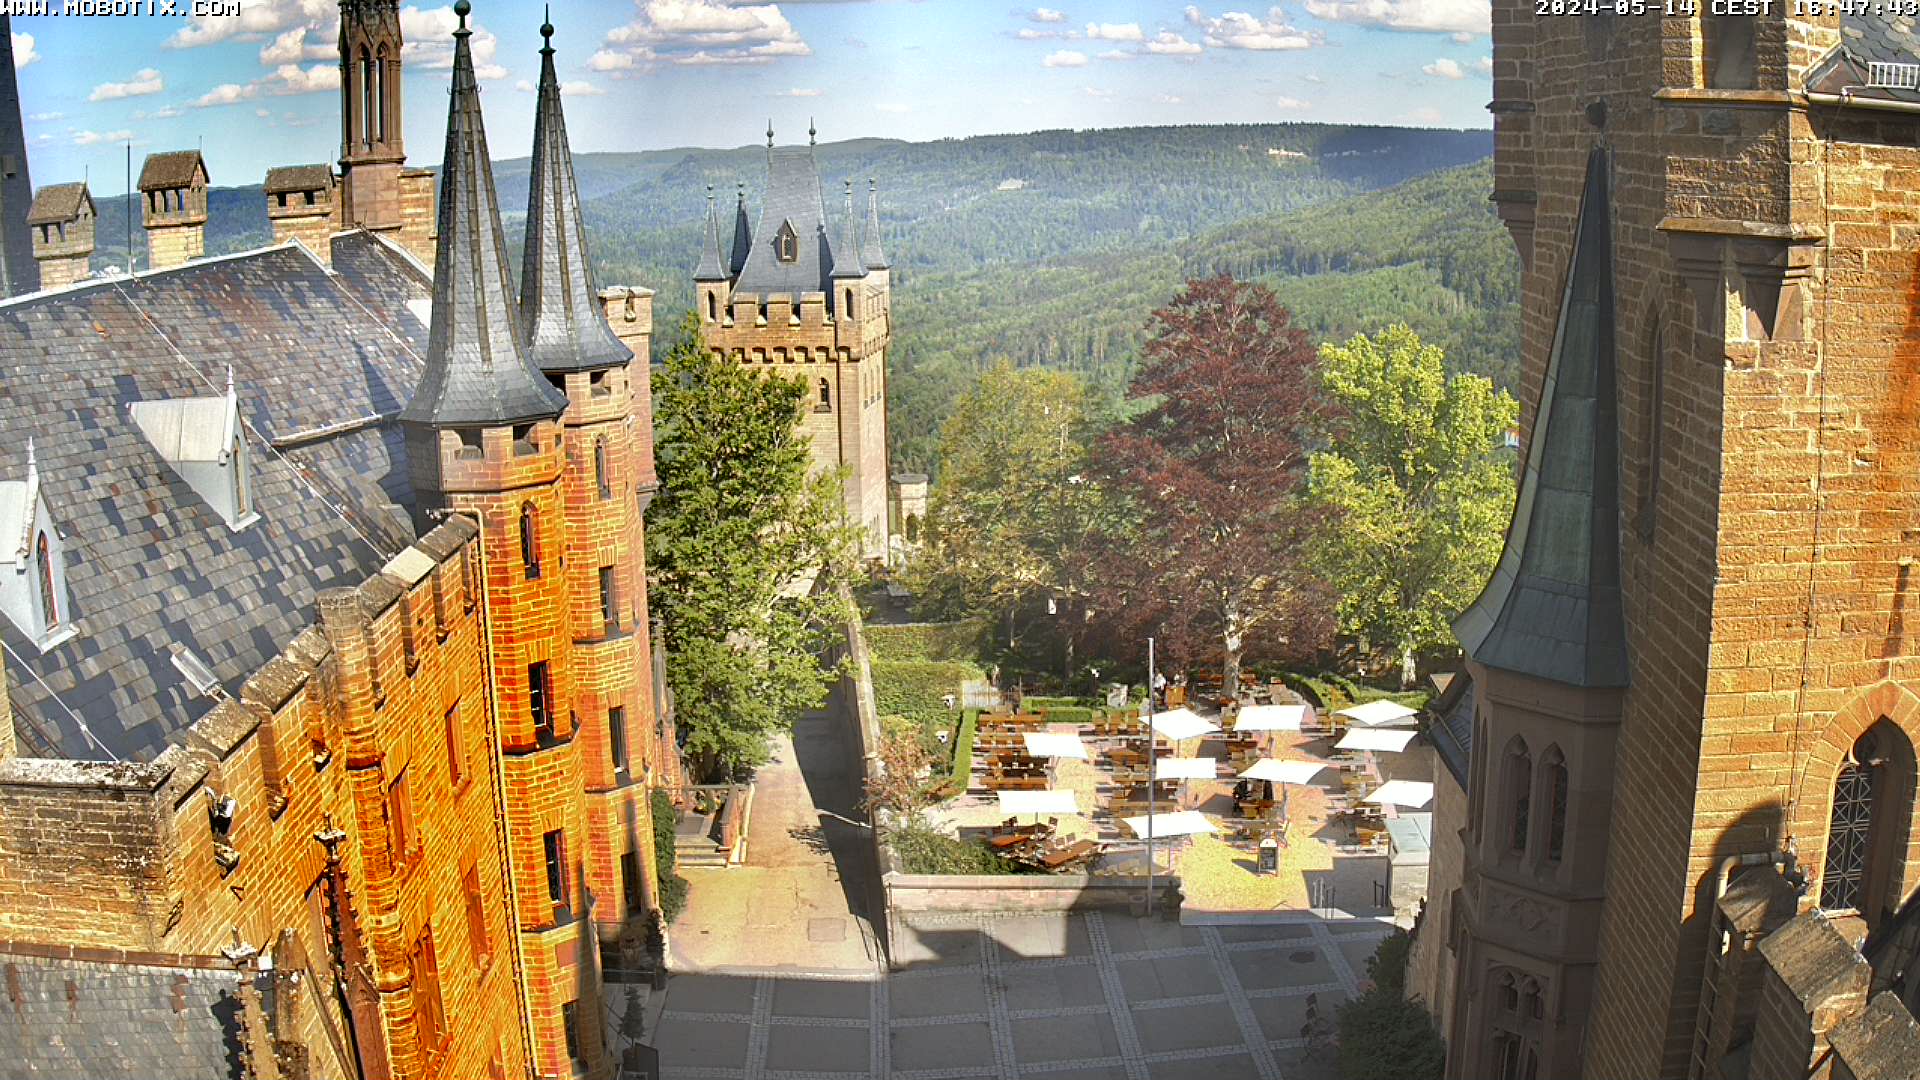 Burg Hohenzollern Thu. 16:50